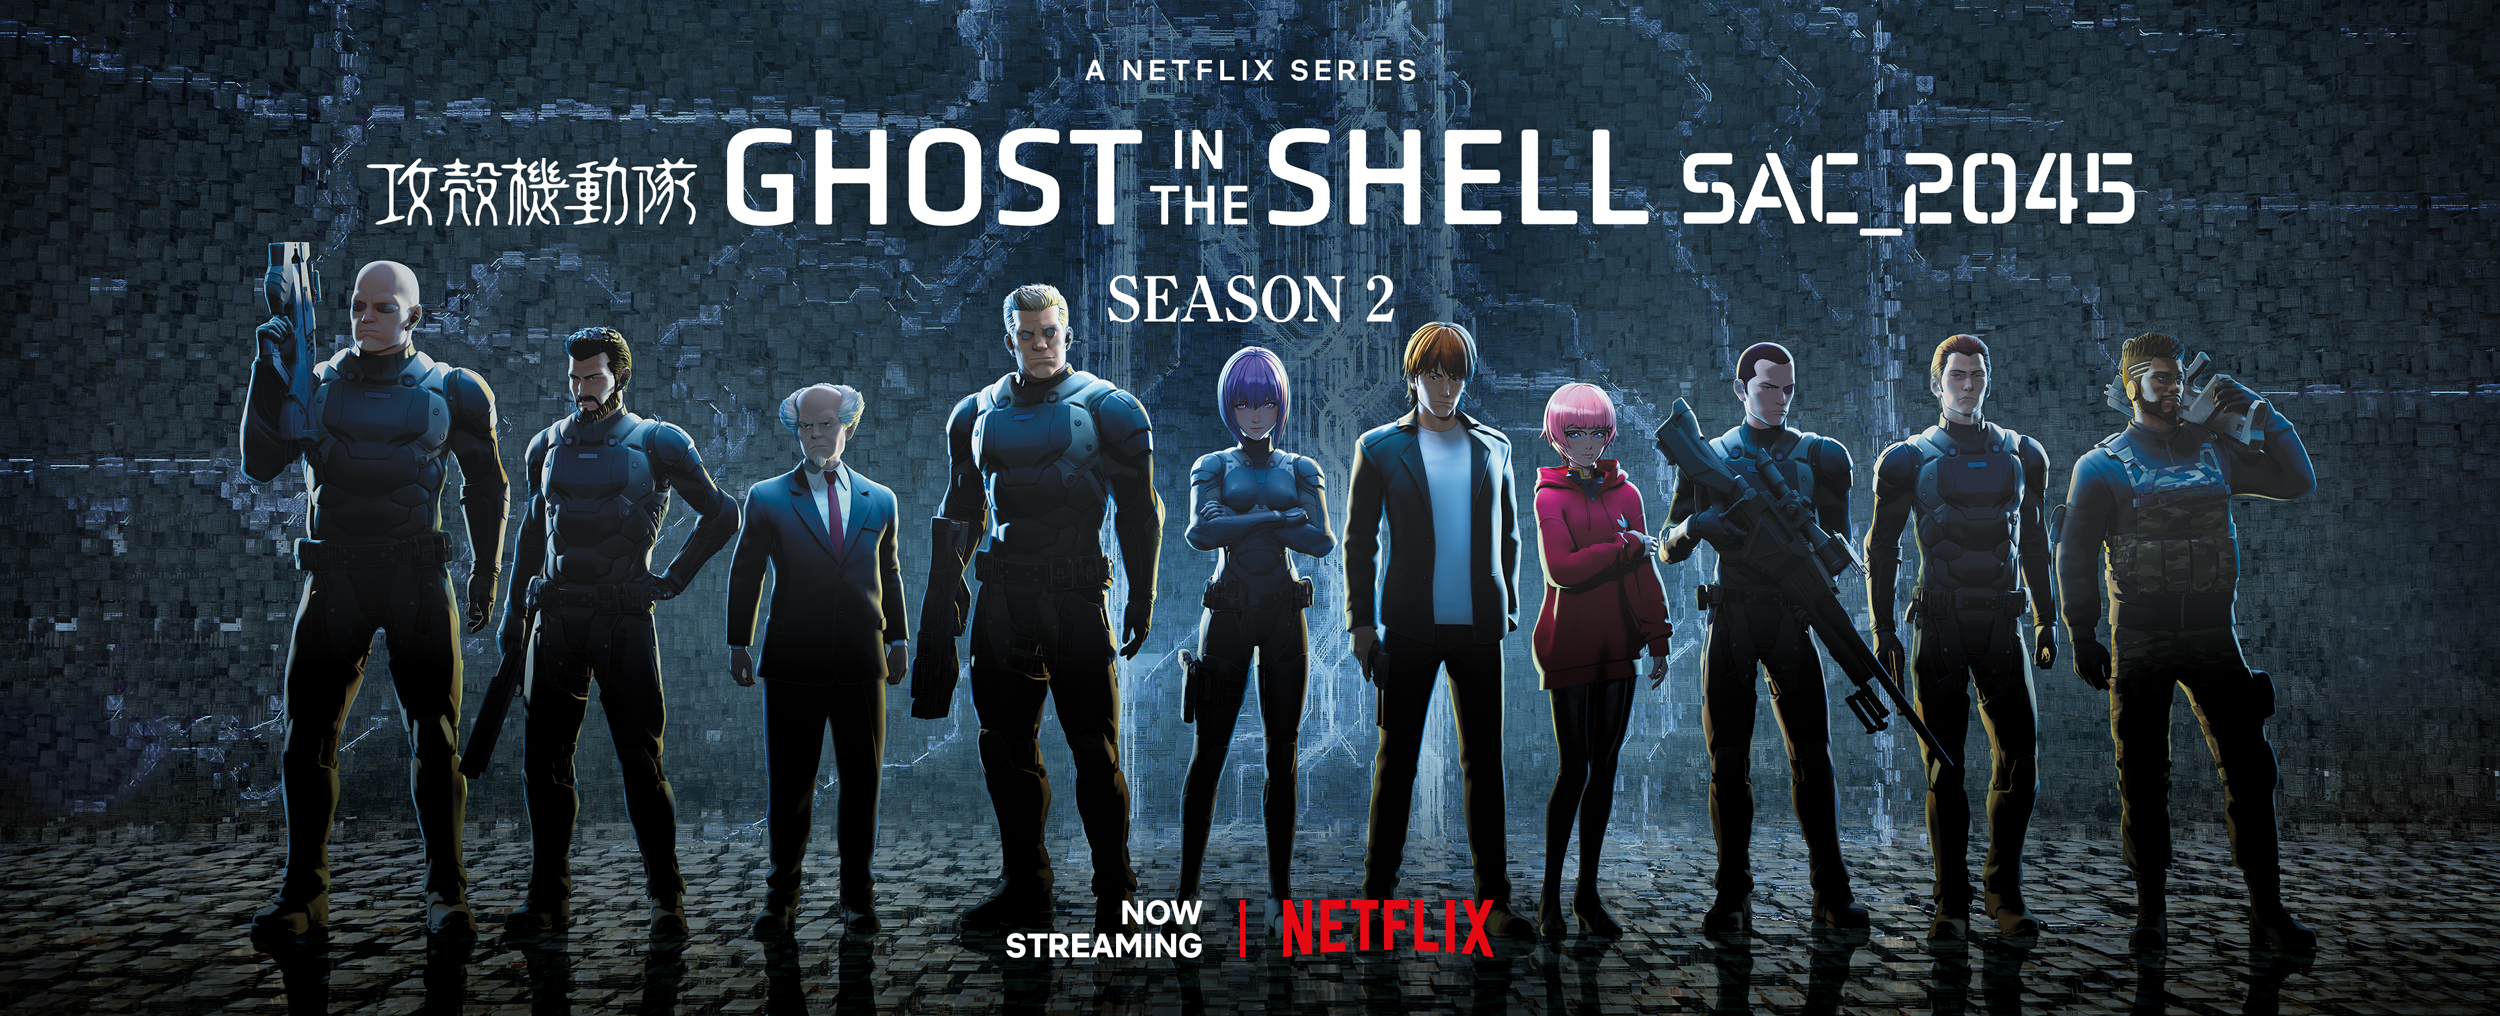 Ghost in the Shell: SAC_2045 Season 2 visual